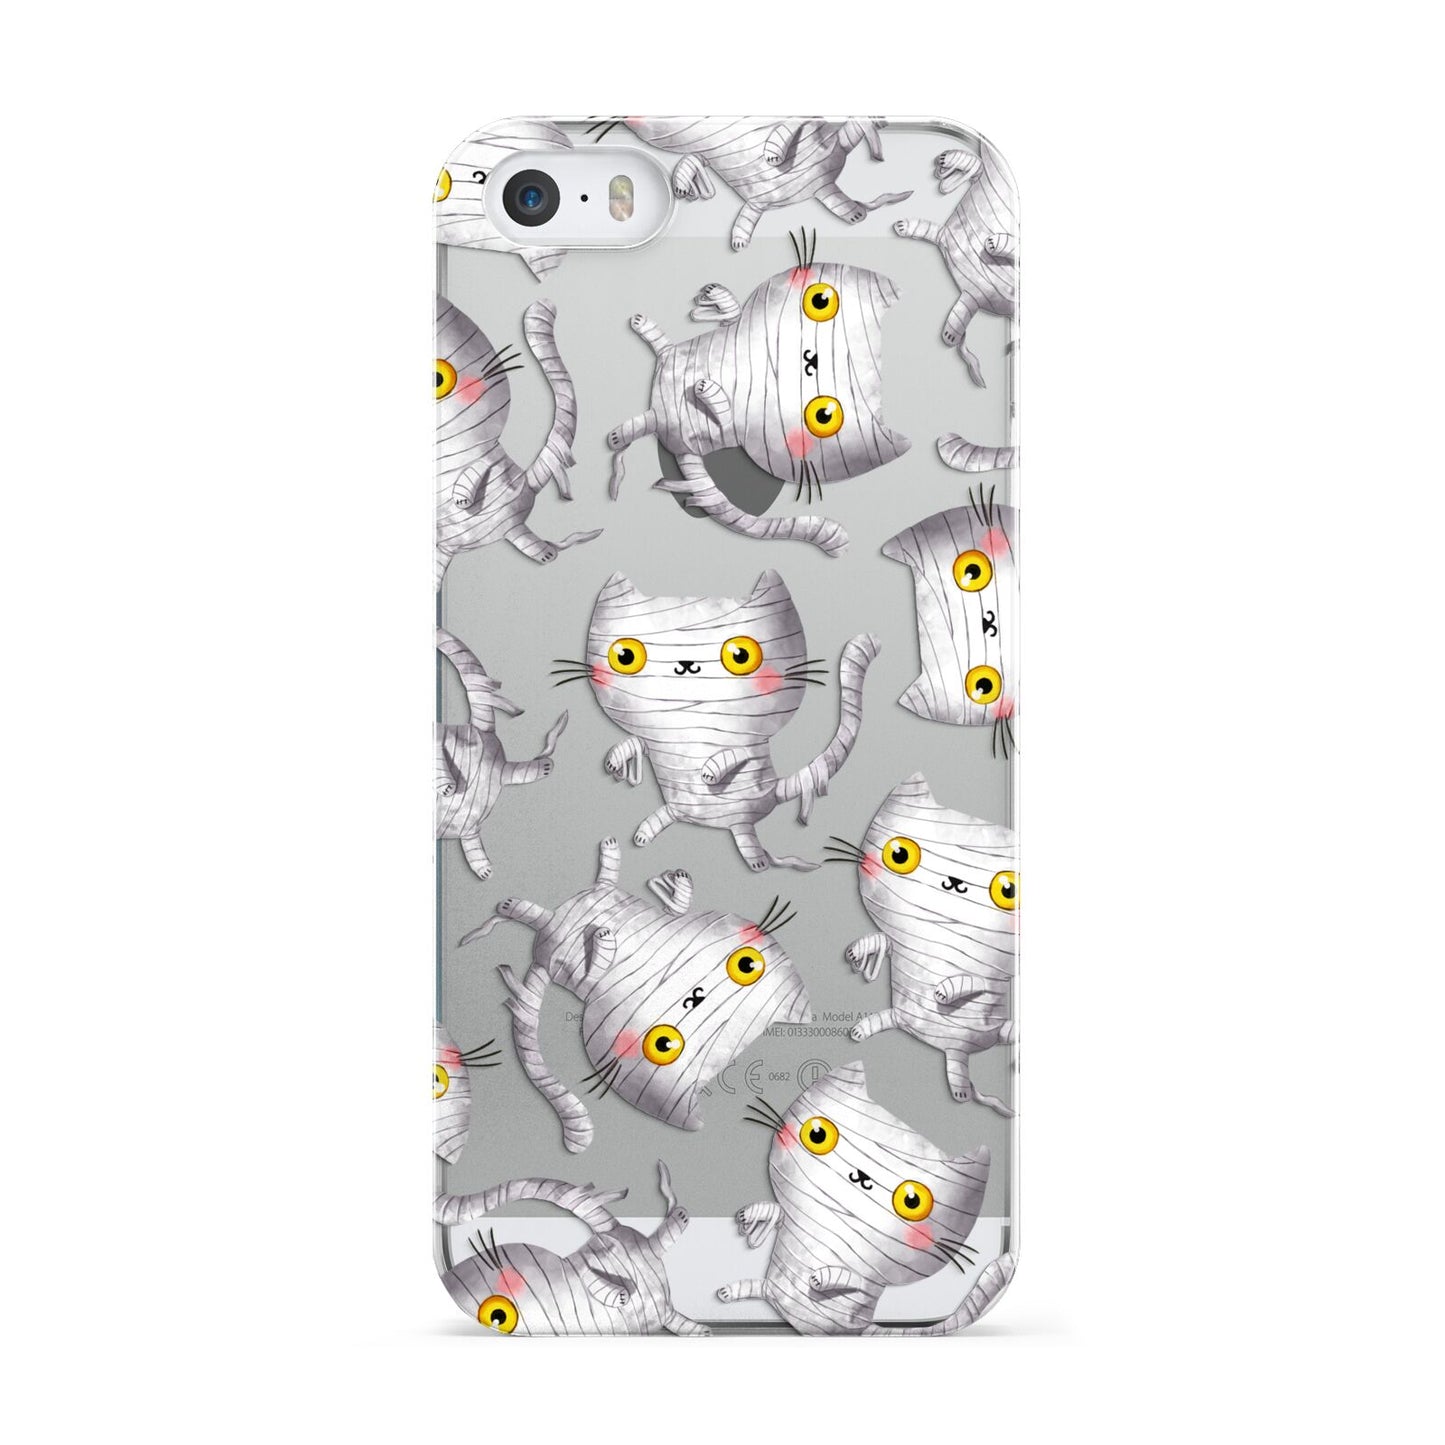 Mummy Cats Apple iPhone 5 Case